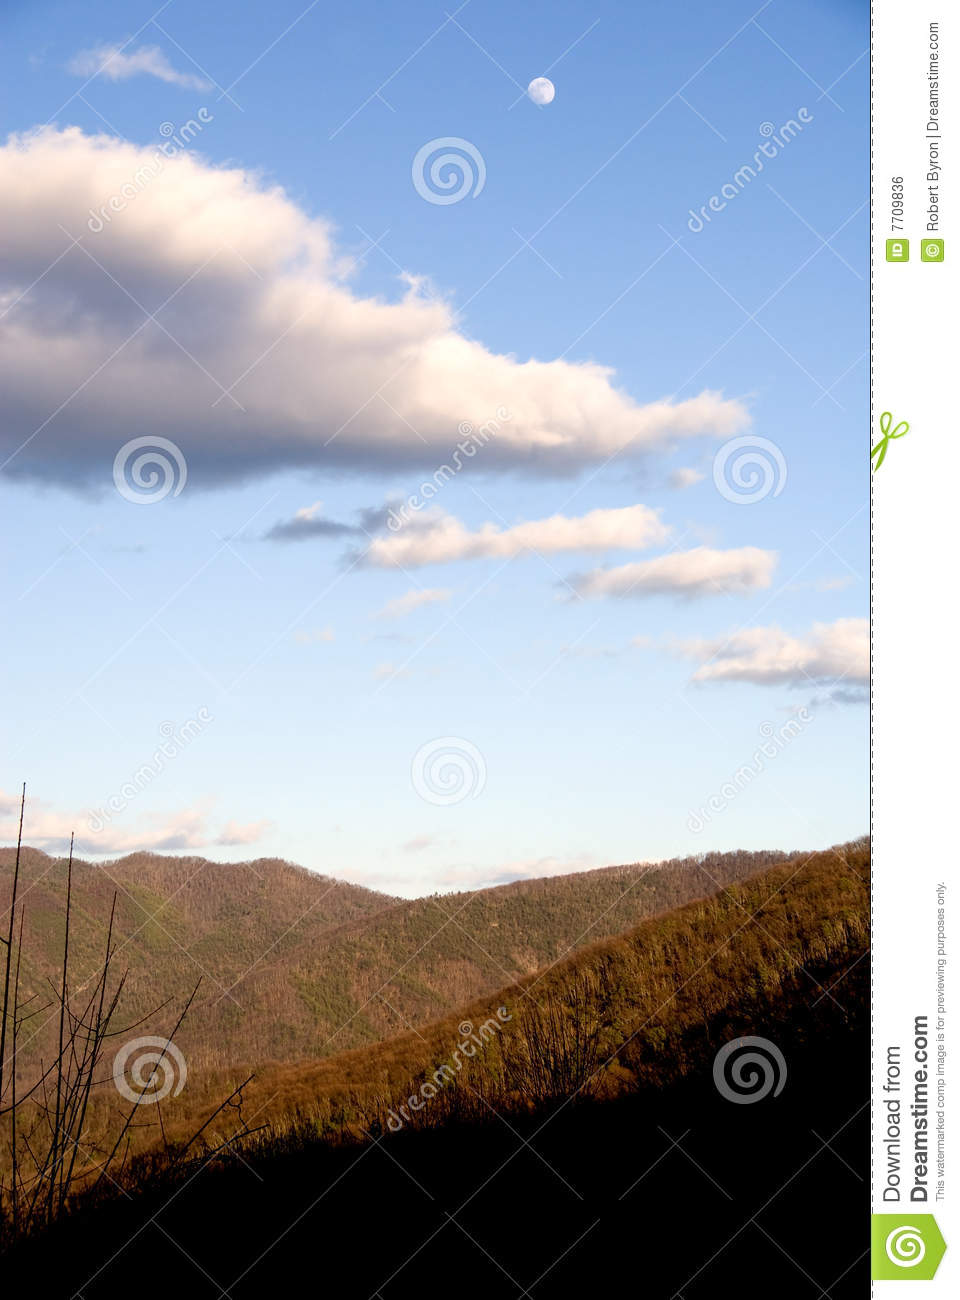 Appalachian Mountains Royalty Free Stock Image   Image  7709836